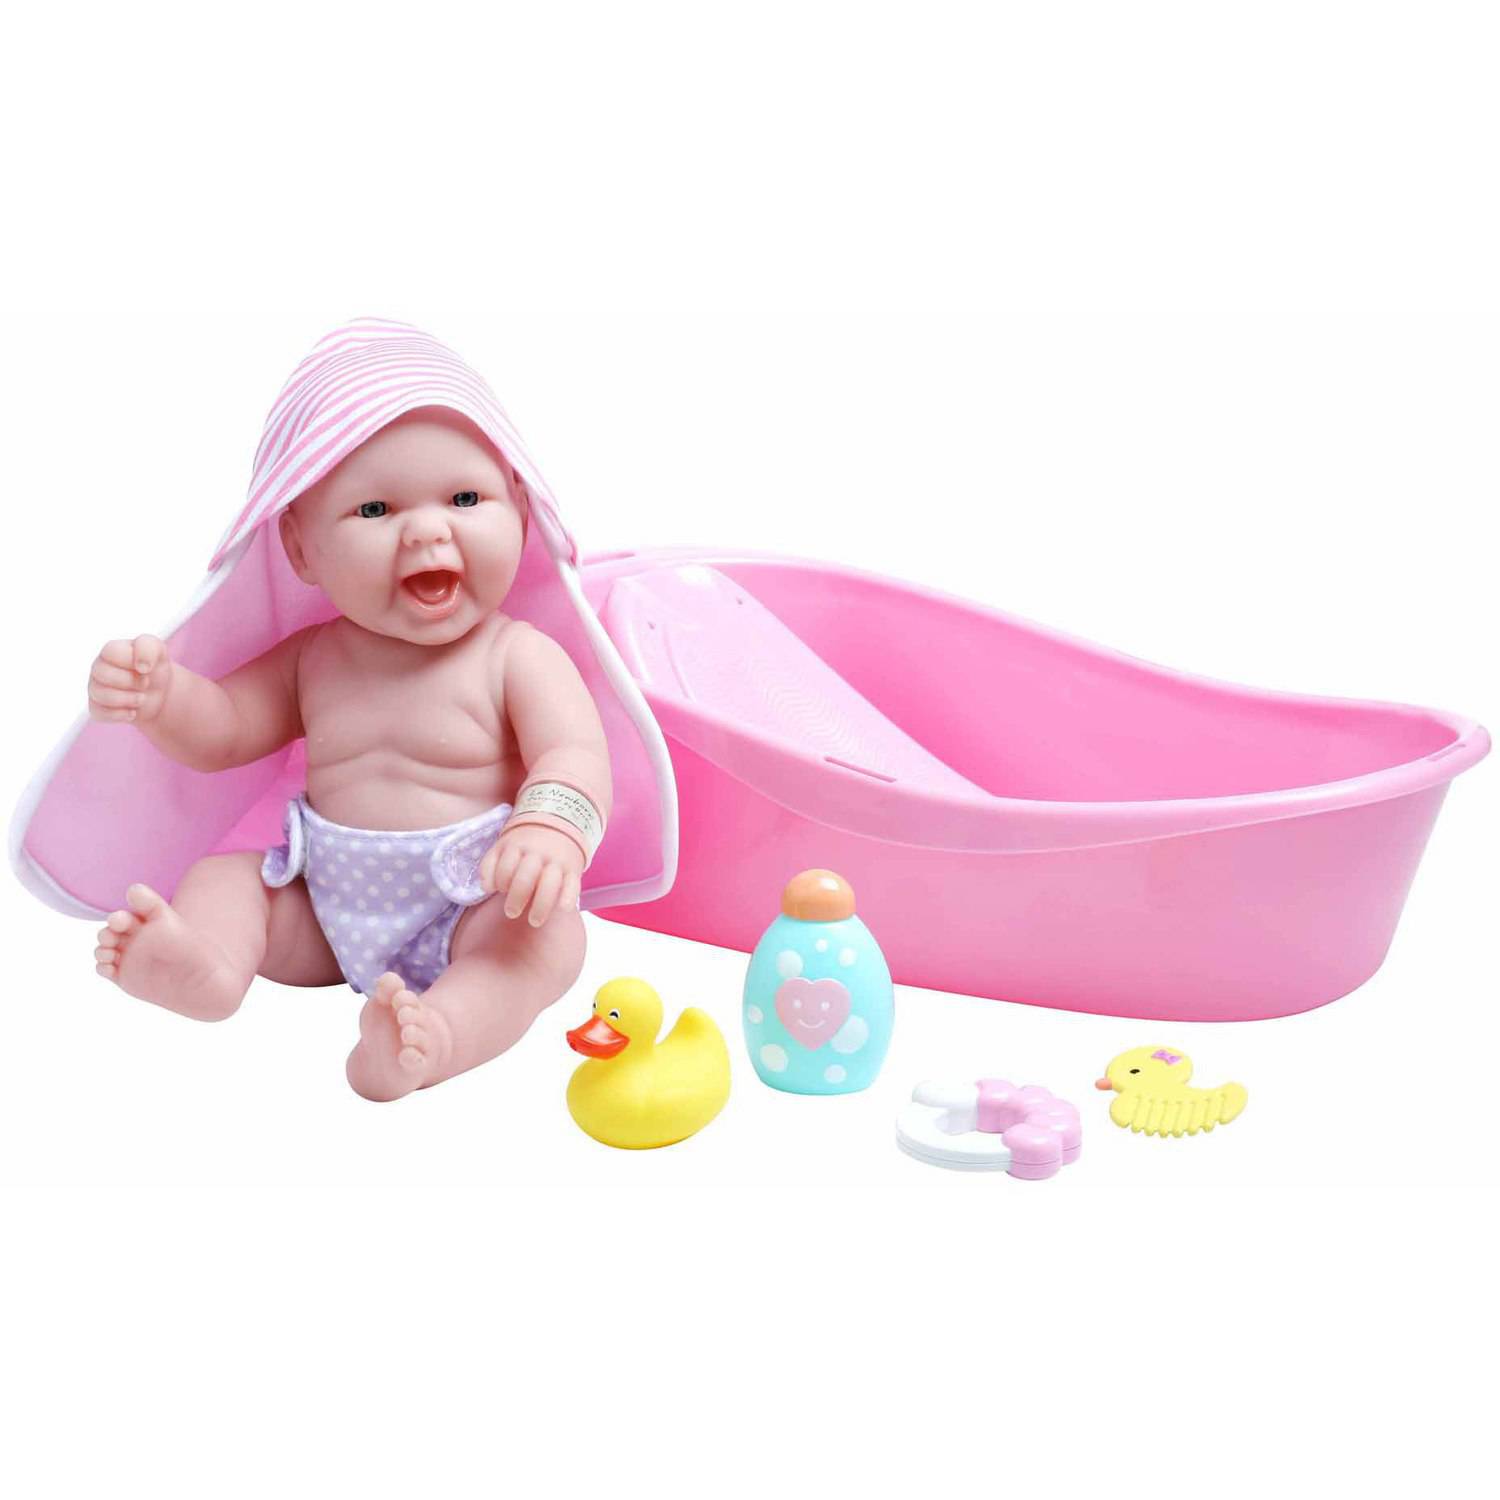 La Newborn Realistic Baby Doll Bathtub Set - Walmart.com